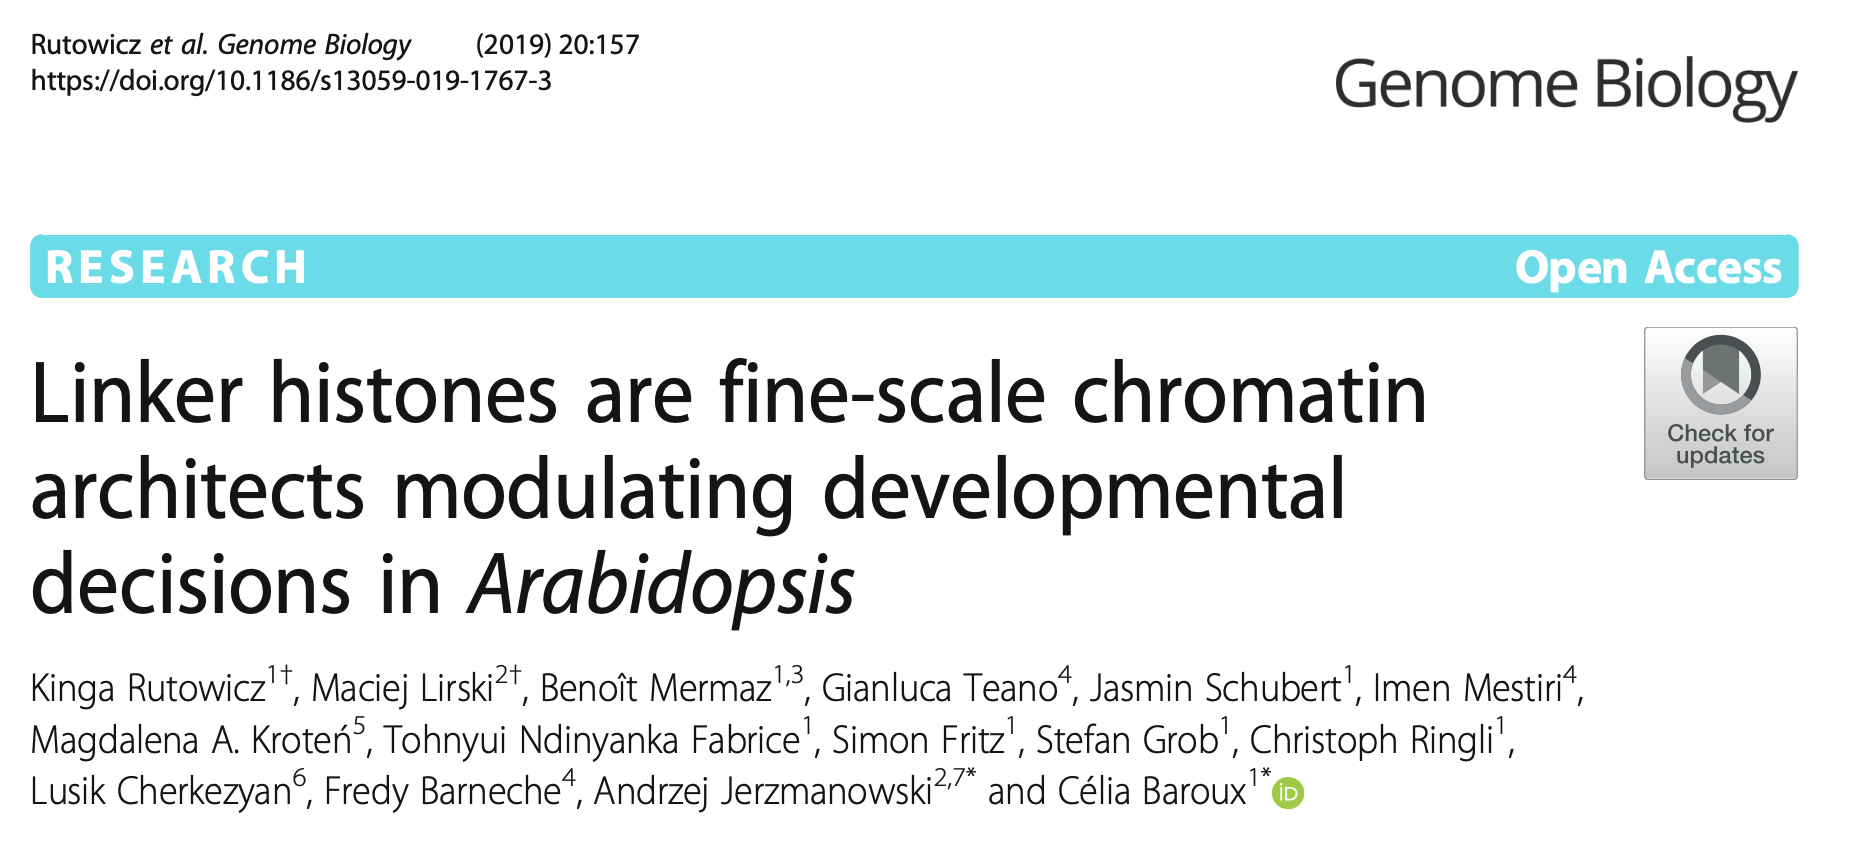 Linker histones are fine-scale chromatin architects modulating developmental decisions in Arabidopsis